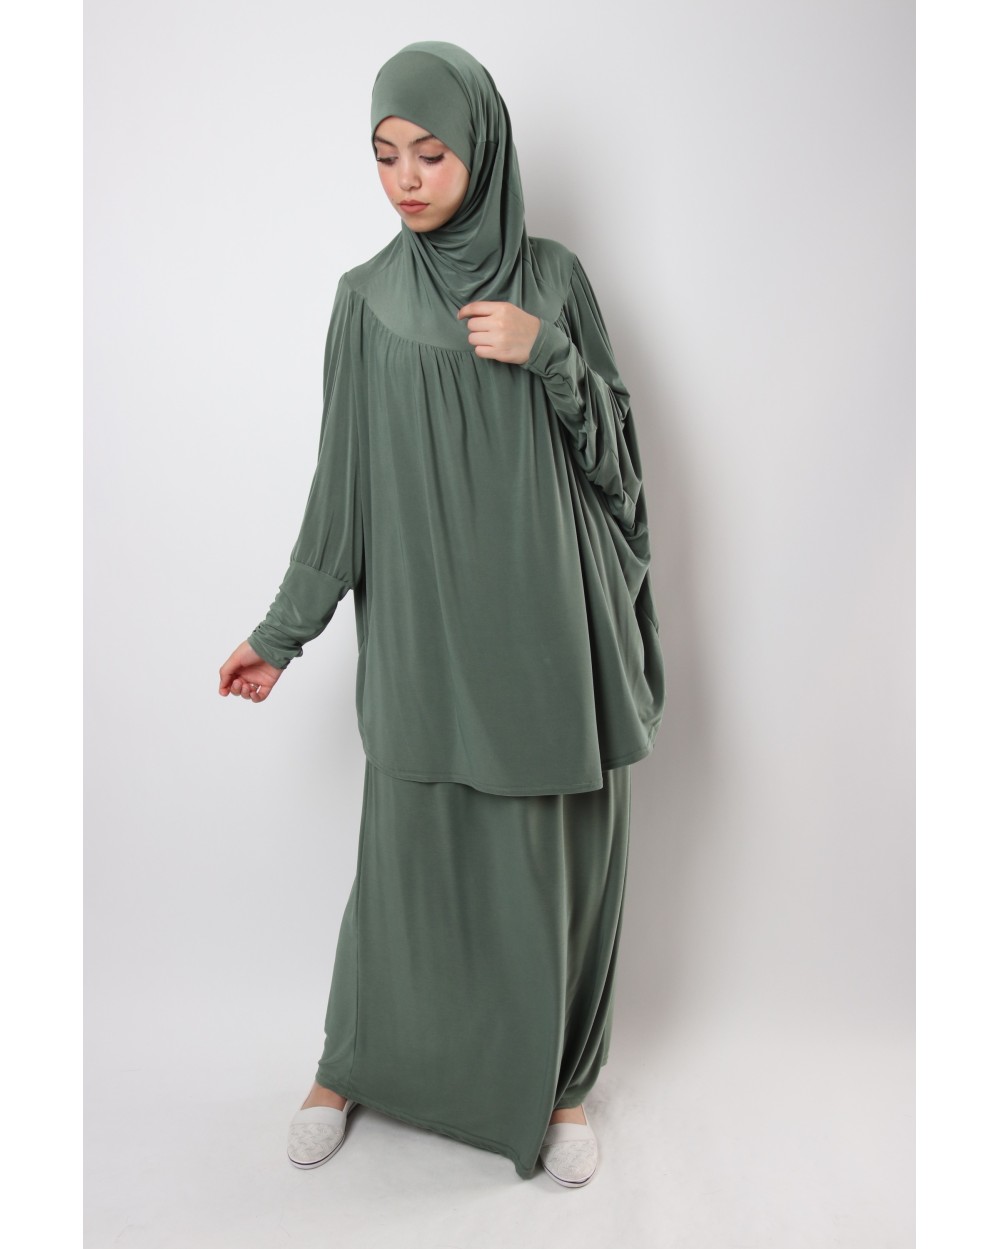 Ensemble cape et jupe style jilbab